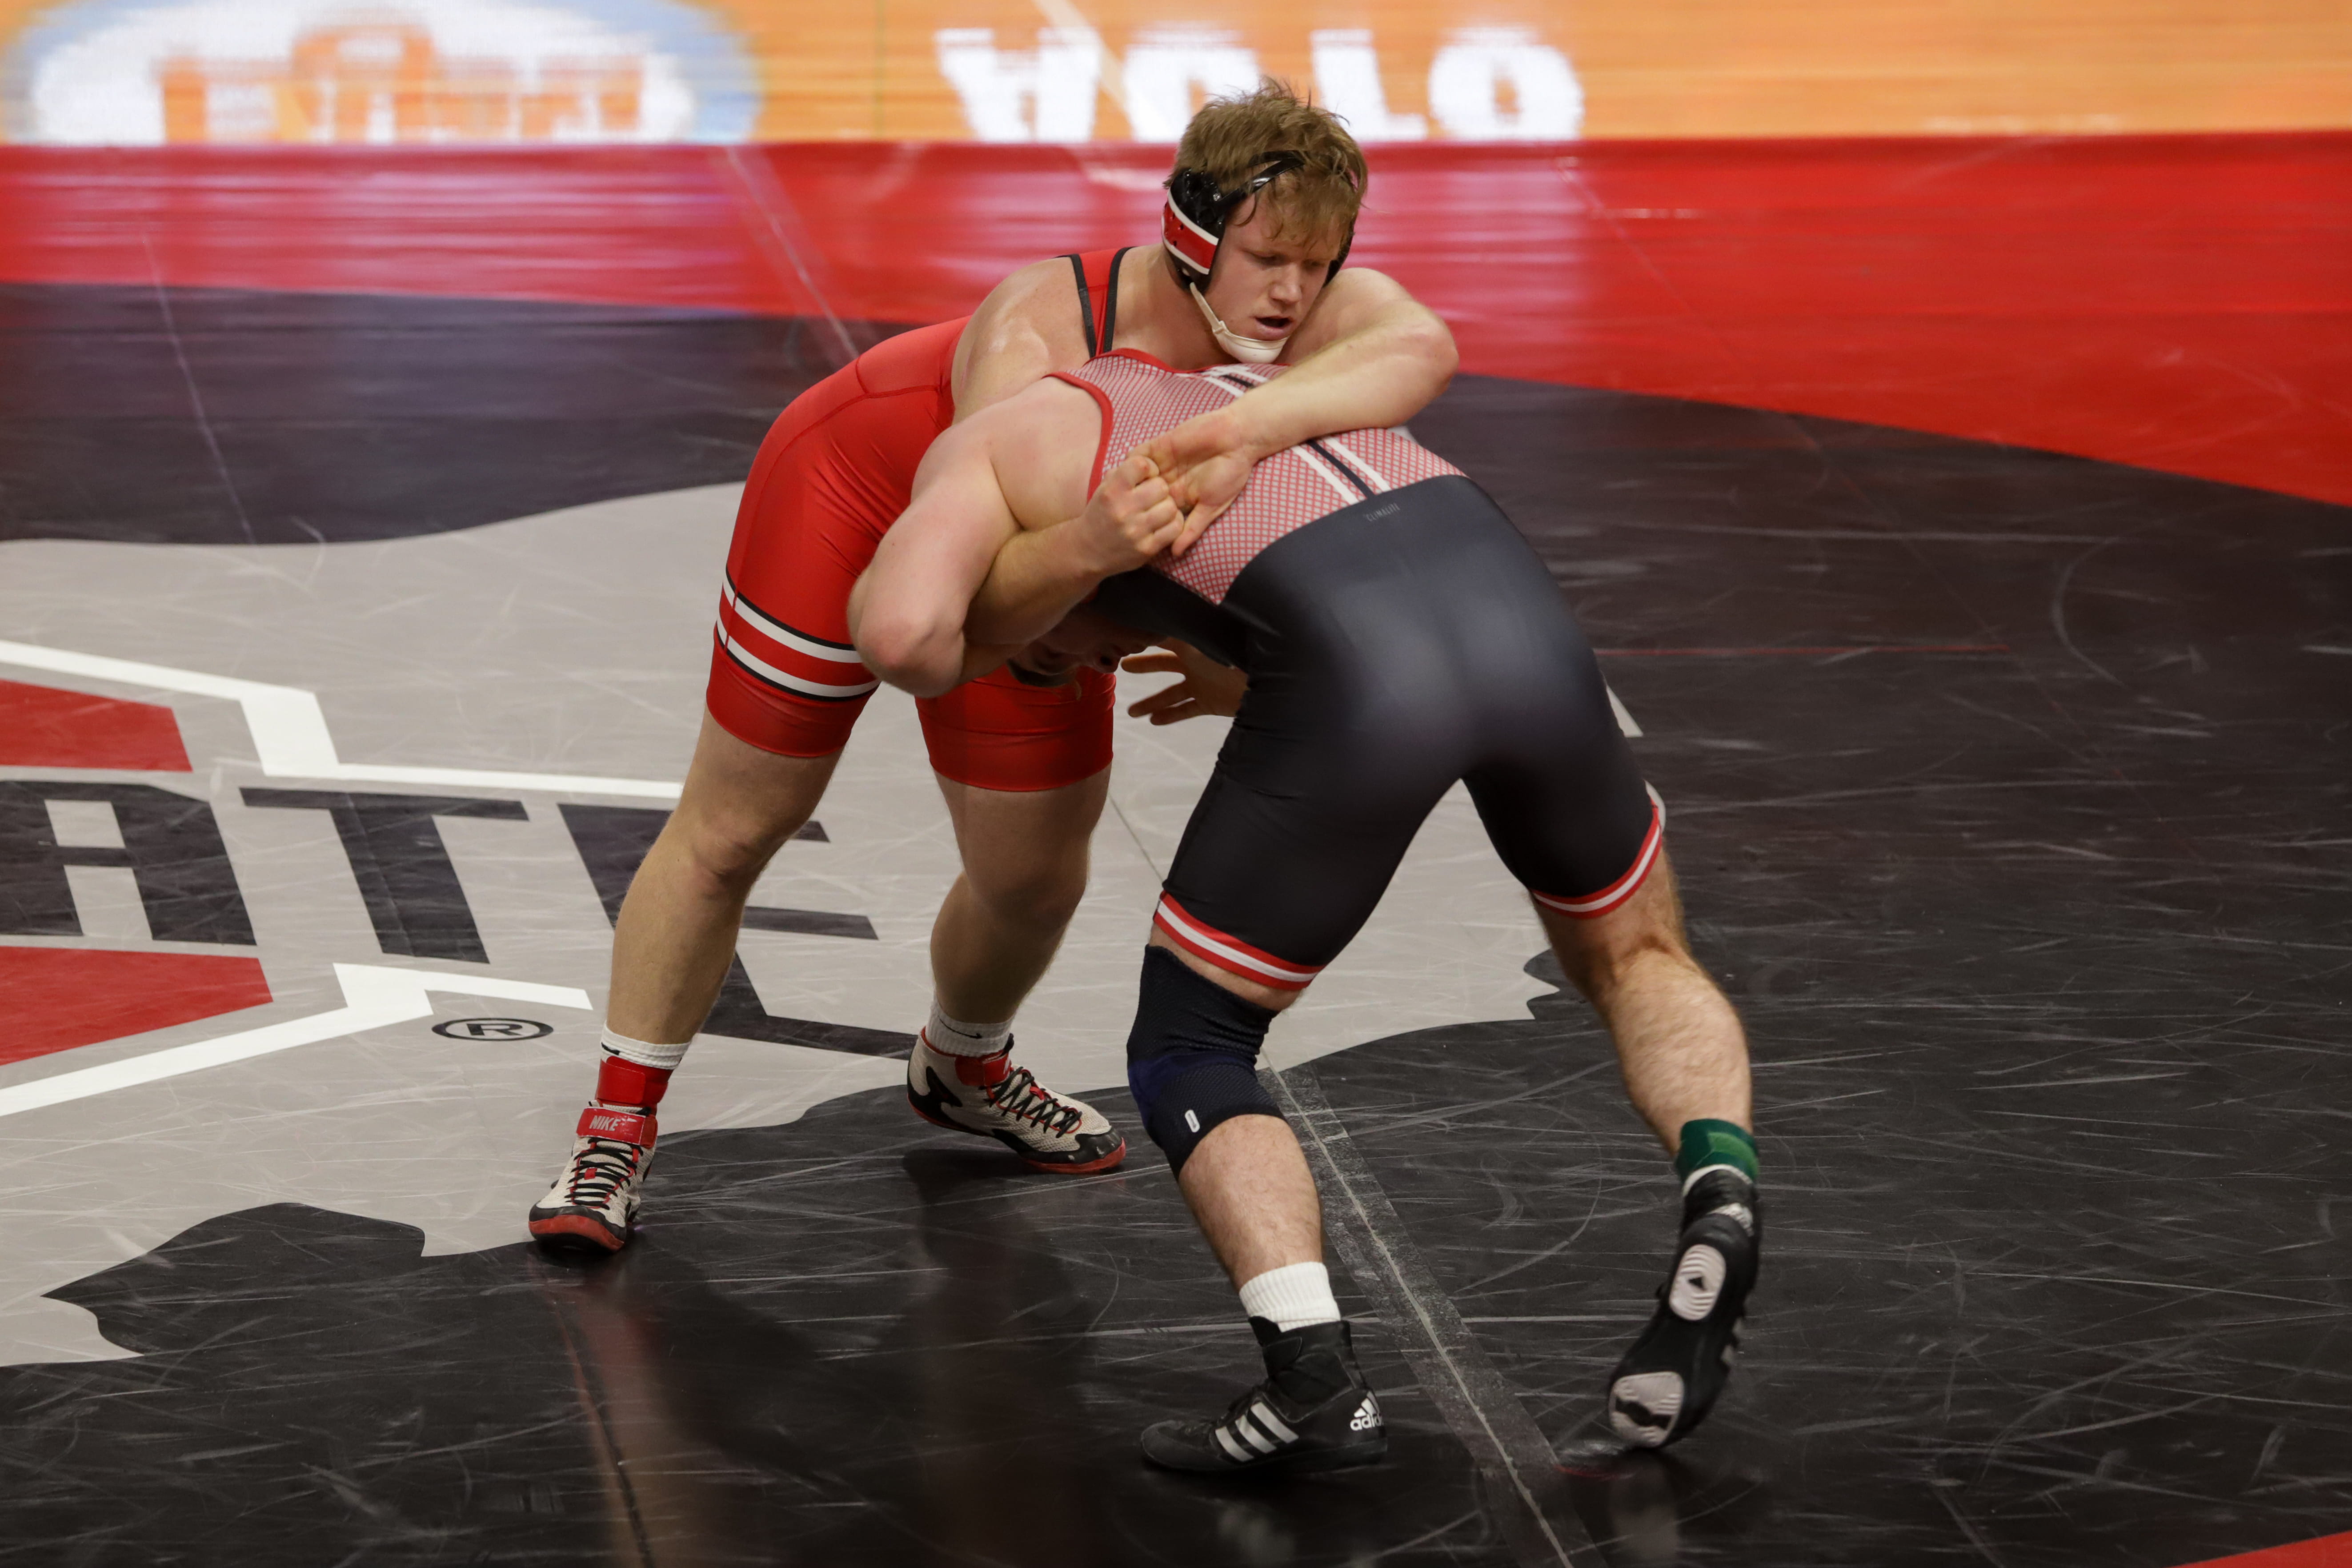 Wrestling: Orndorff pushes No. 8 Ohio State past No. 10 Virginia Tech